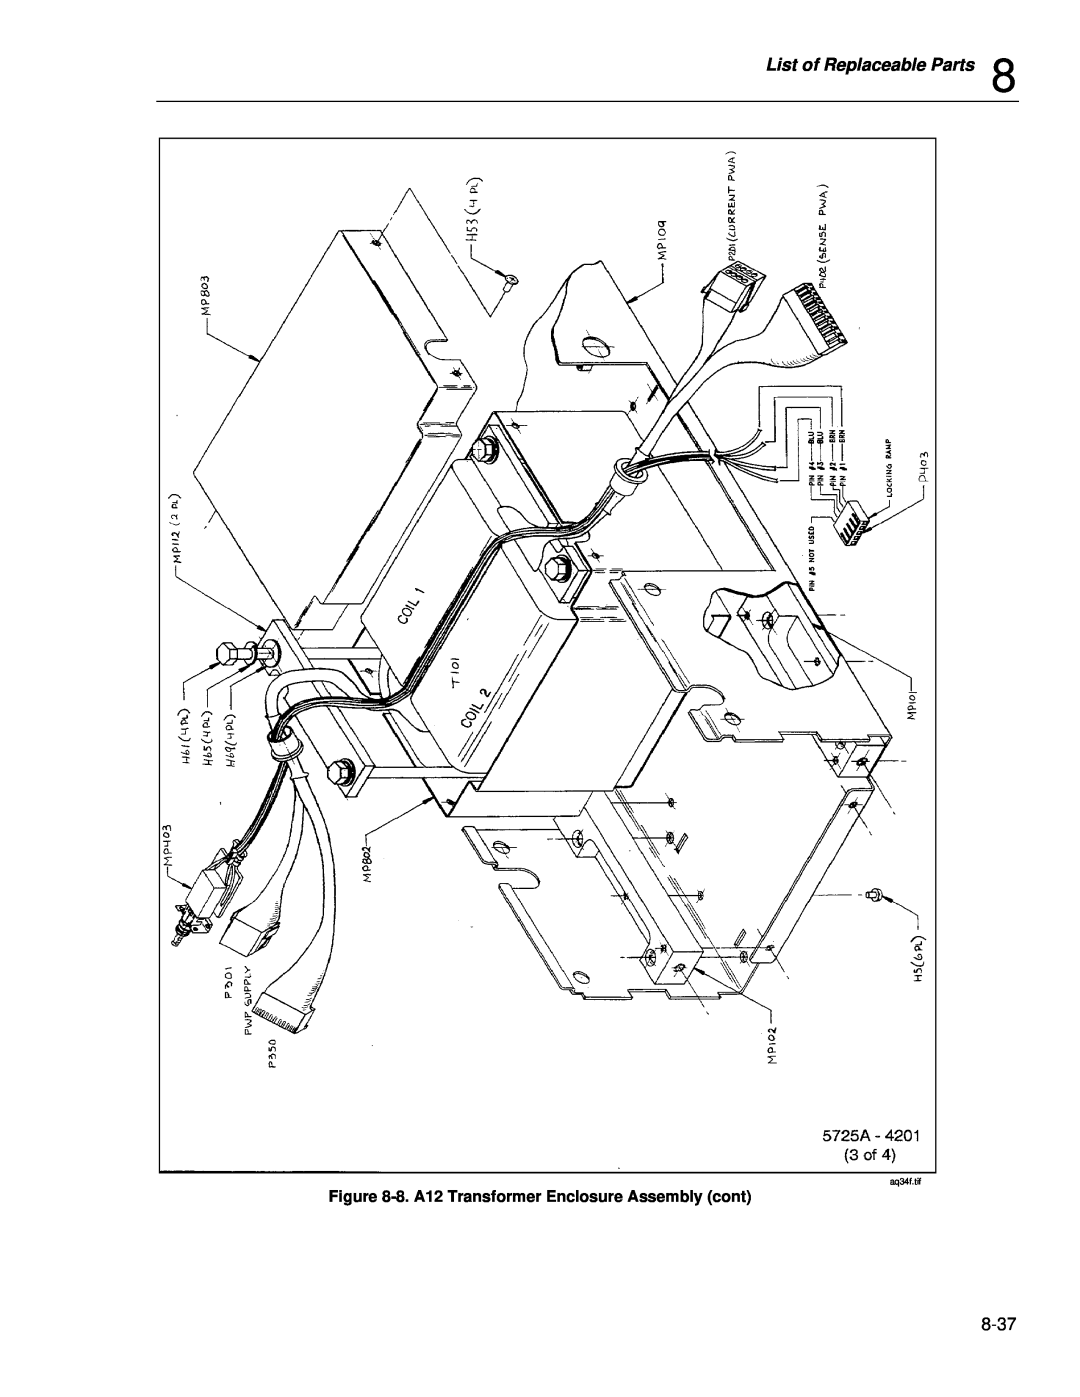 Fluke 5725A instruction manual List of Replaceable Parts, aq34f.tif 